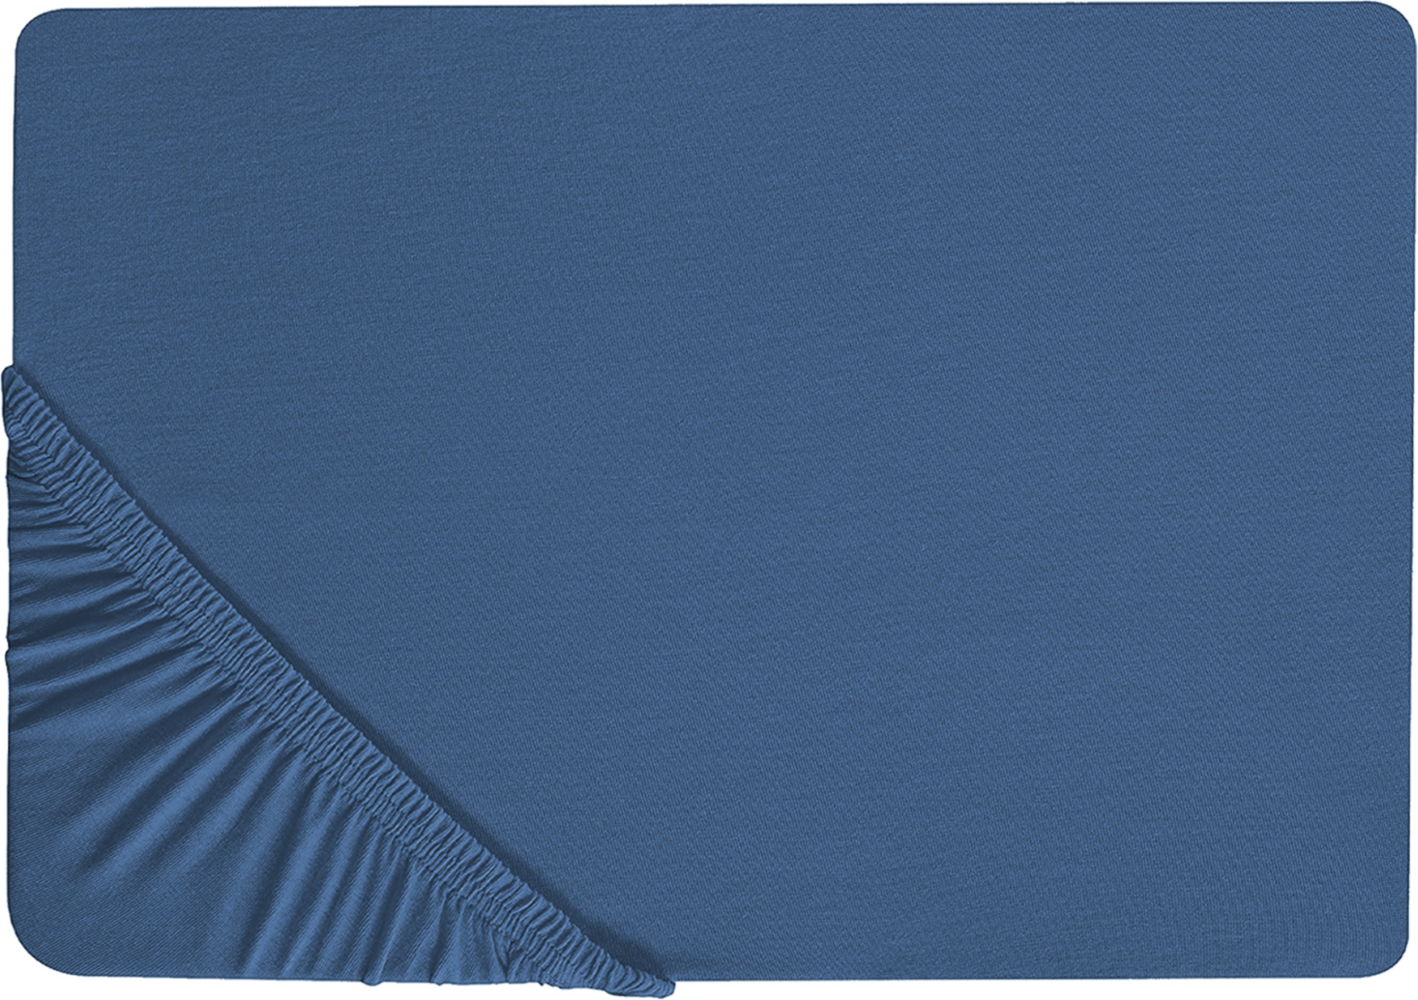 Spannbettlaken Baumwolle marineblau 140 x 200 cm JANBU Bild 1